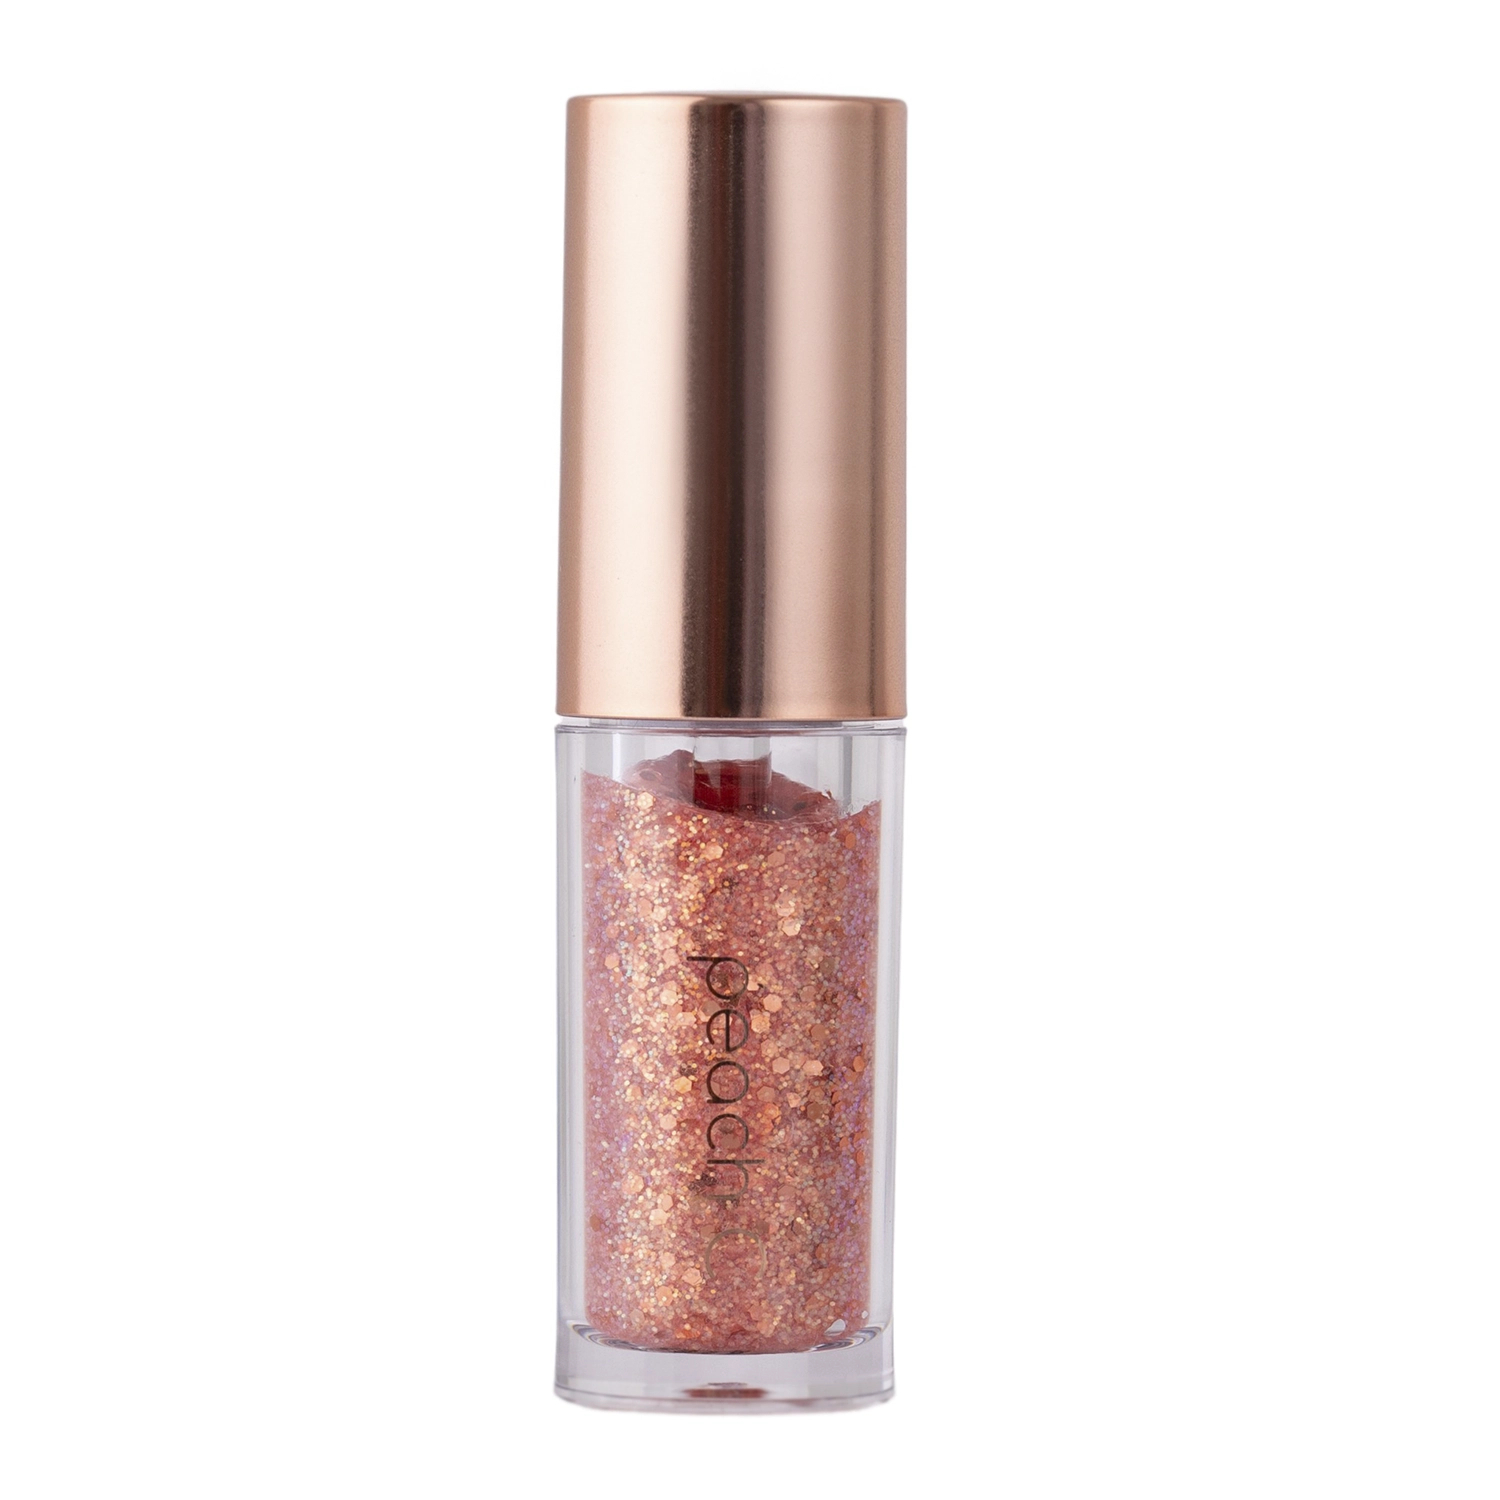 Peach C - Champagne Eye Glitter - Глиттерные тени для век - #03 Rose Coral - 3,5g